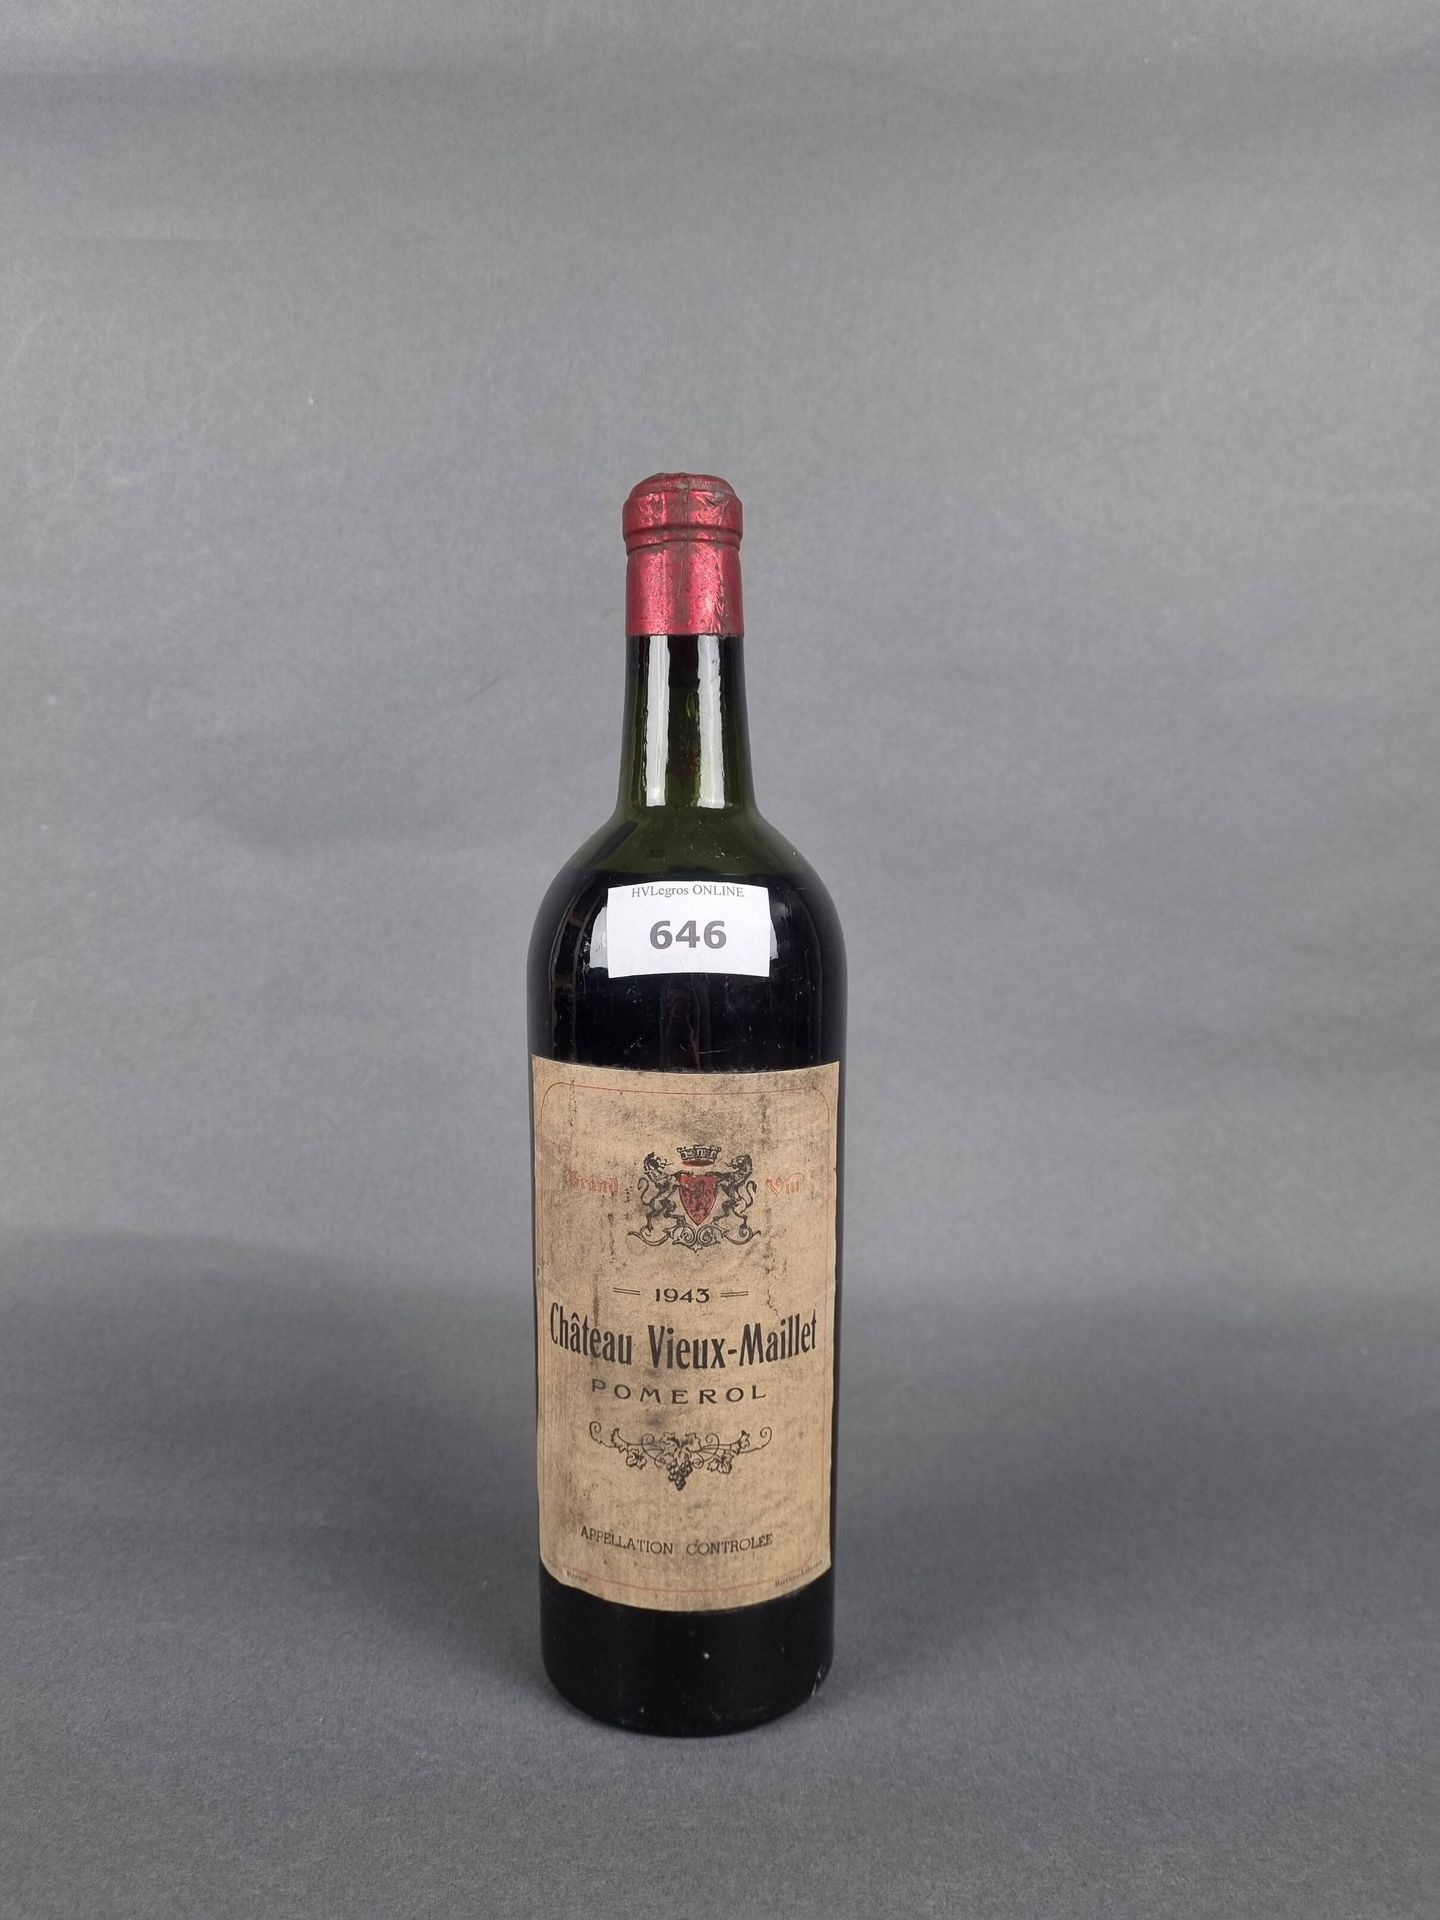 Null 1 bottle of Château Vieux-Maillet Pomerol 1943.